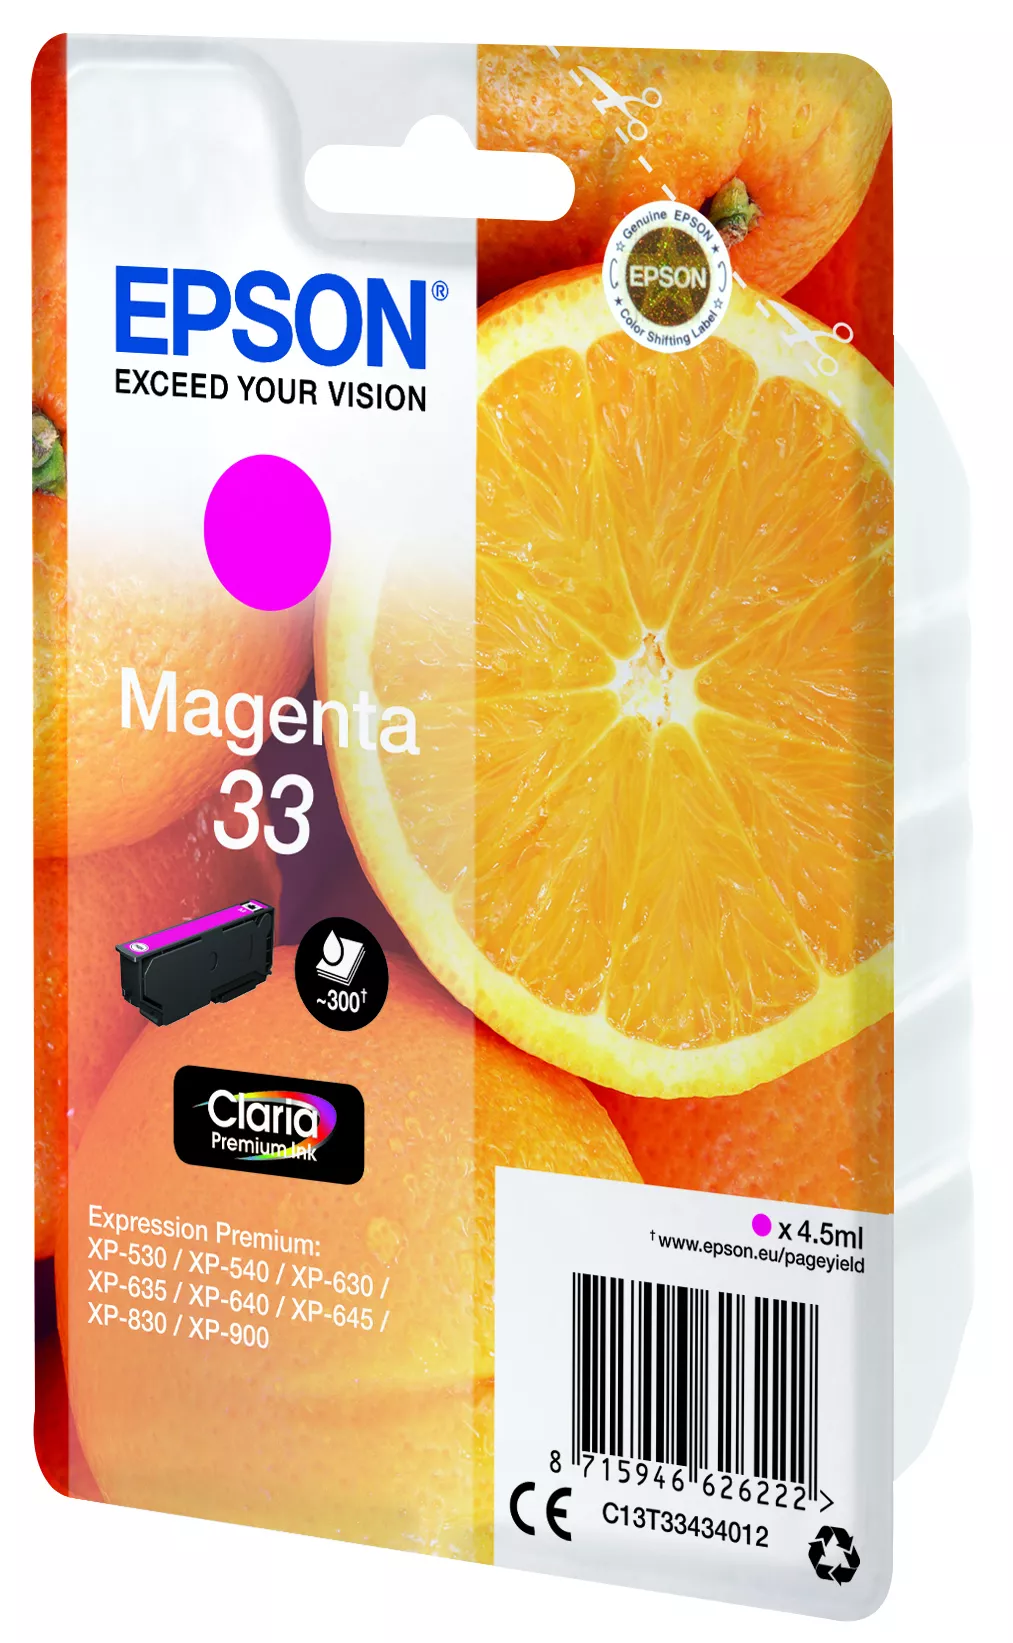 Vente EPSON Cartouche Oranges Encre Claria Premium Magenta Epson au meilleur prix - visuel 4